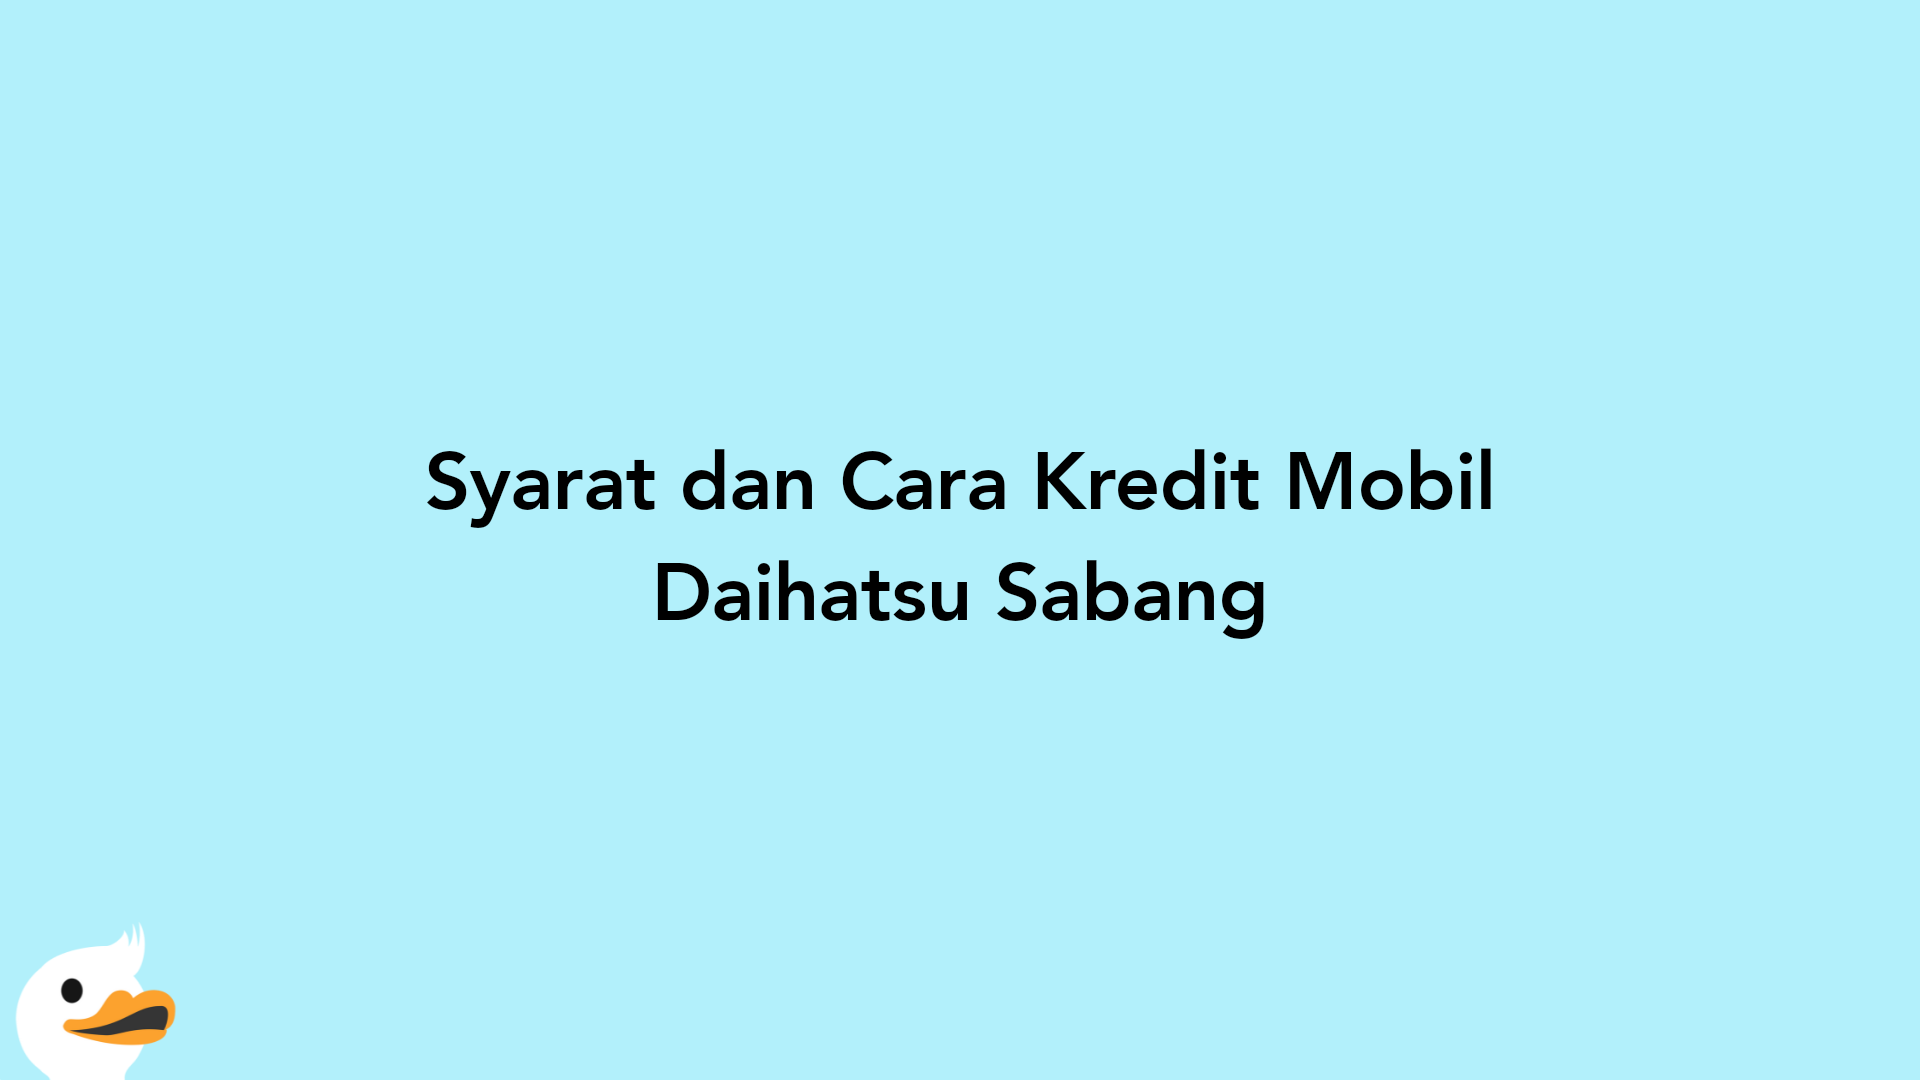 Syarat dan Cara Kredit Mobil Daihatsu Sabang